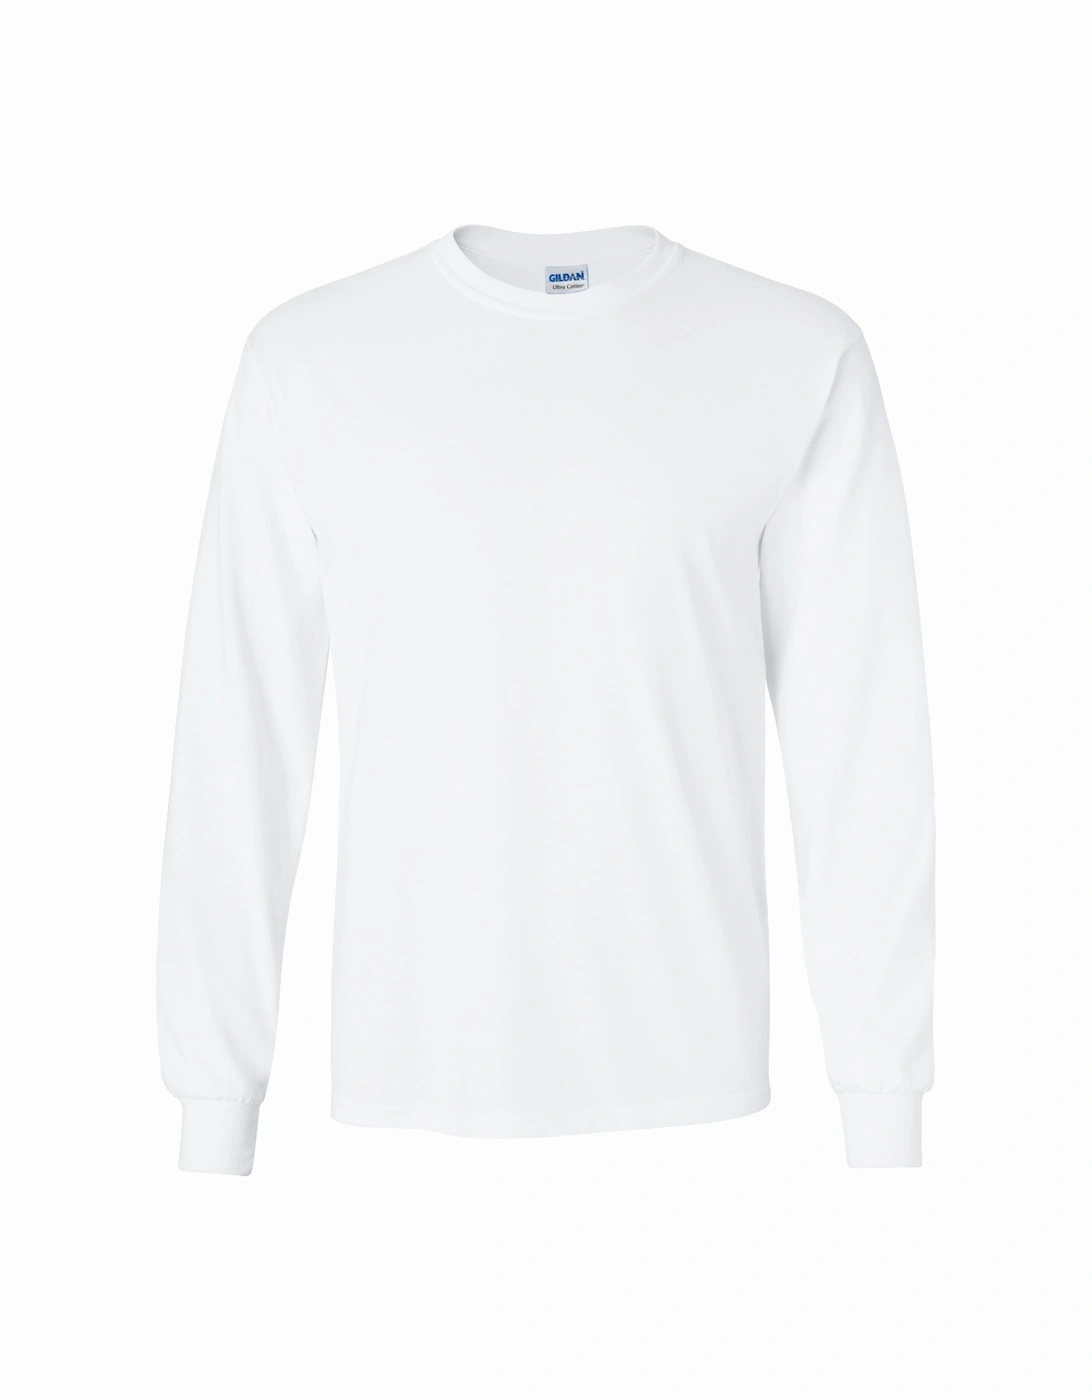 Mens Plain Crew Neck Ultra Cotton Long Sleeve T-Shirt